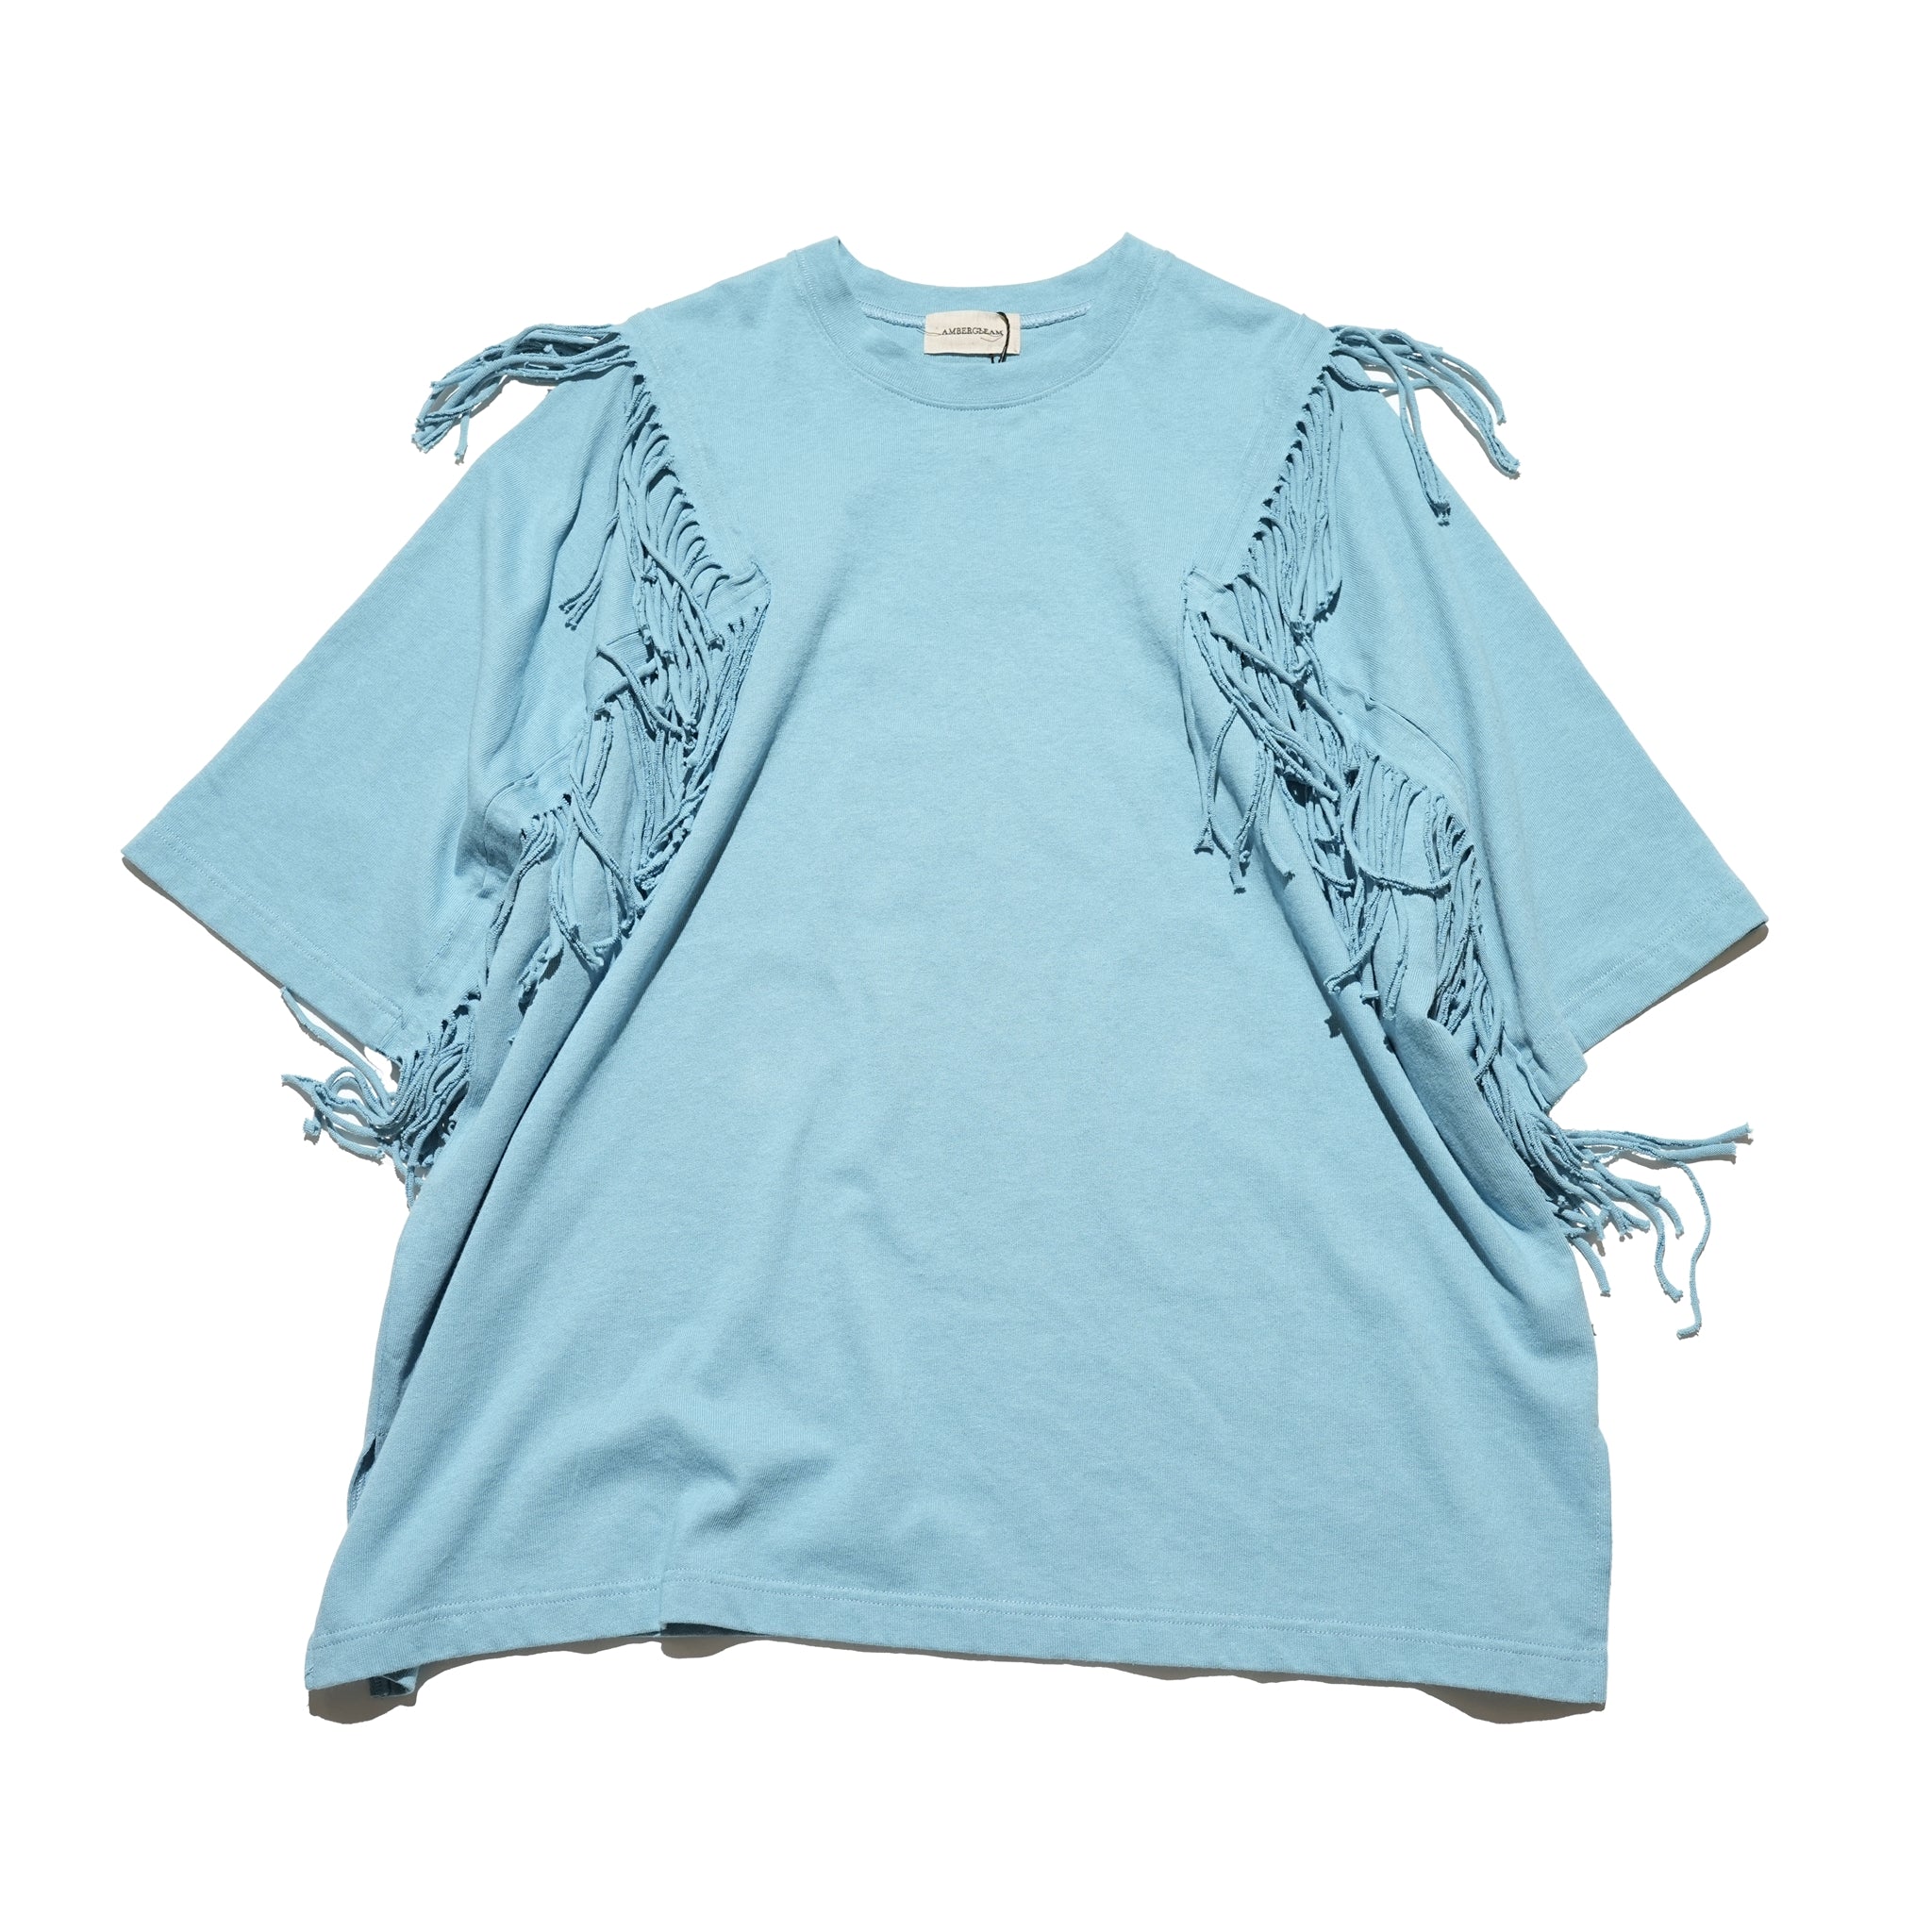 Name:Fringe Panel CutT-Shirt | Color:Smoke Cloud/Turquoise/Chocolate【AMBERGLEAM_アンバーグリーム】| No:1176141311